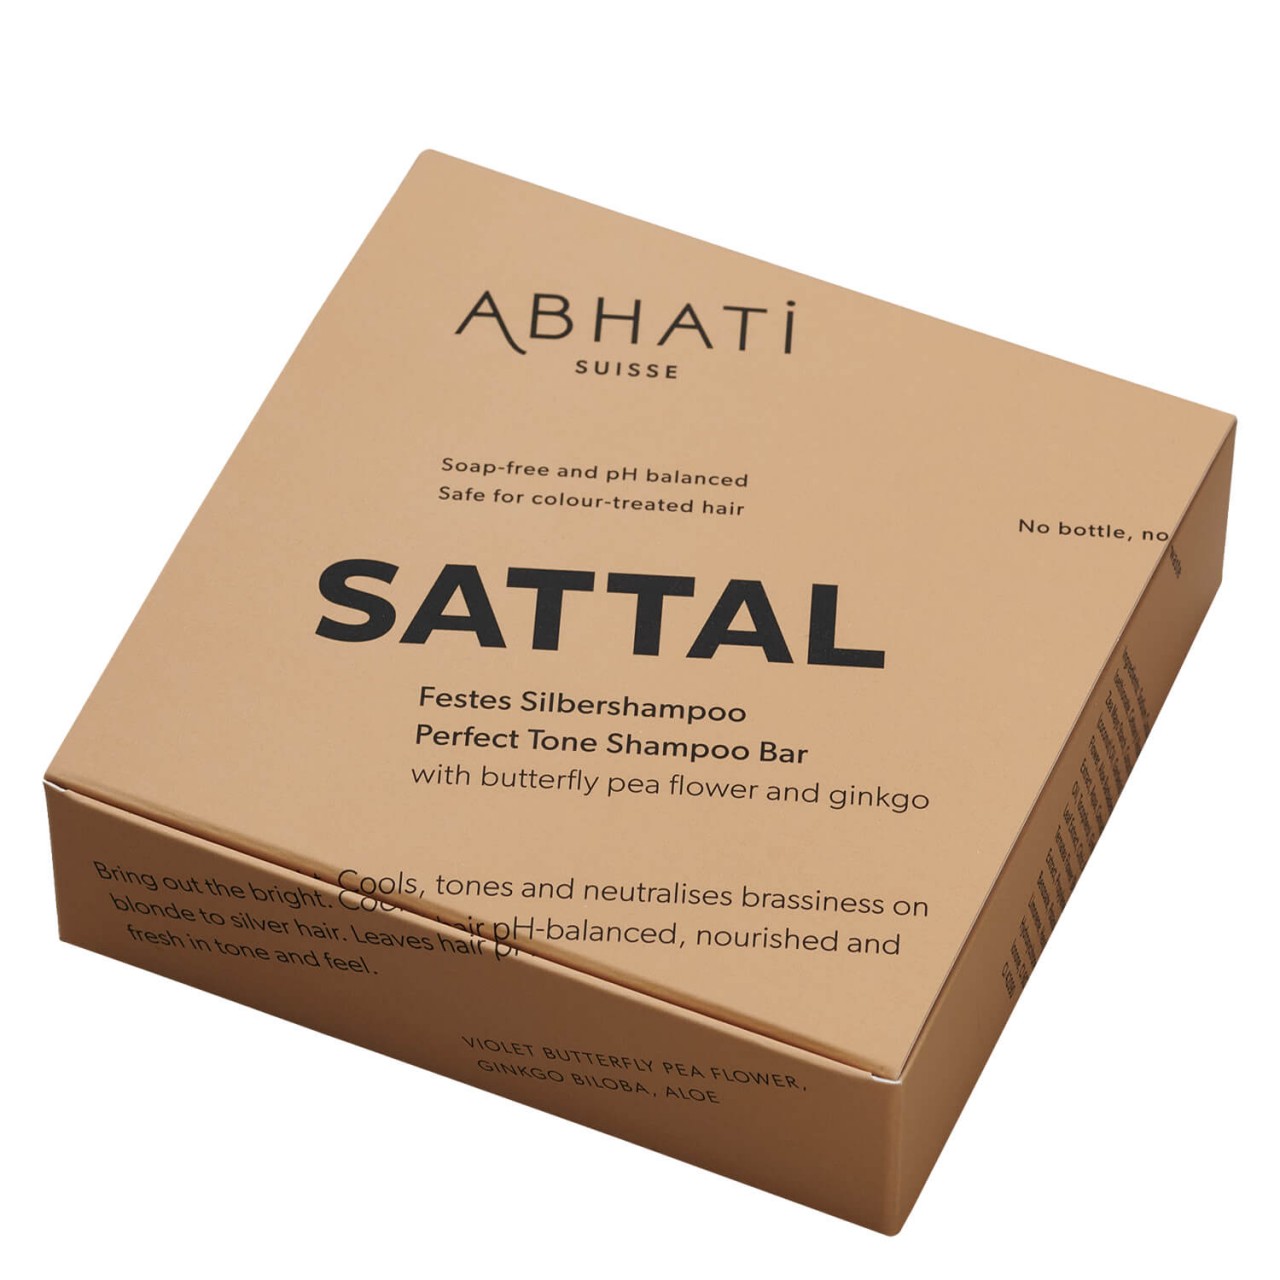 ABHATI Suisse - Sattal Perfect Tone Silber Shampoo Bar